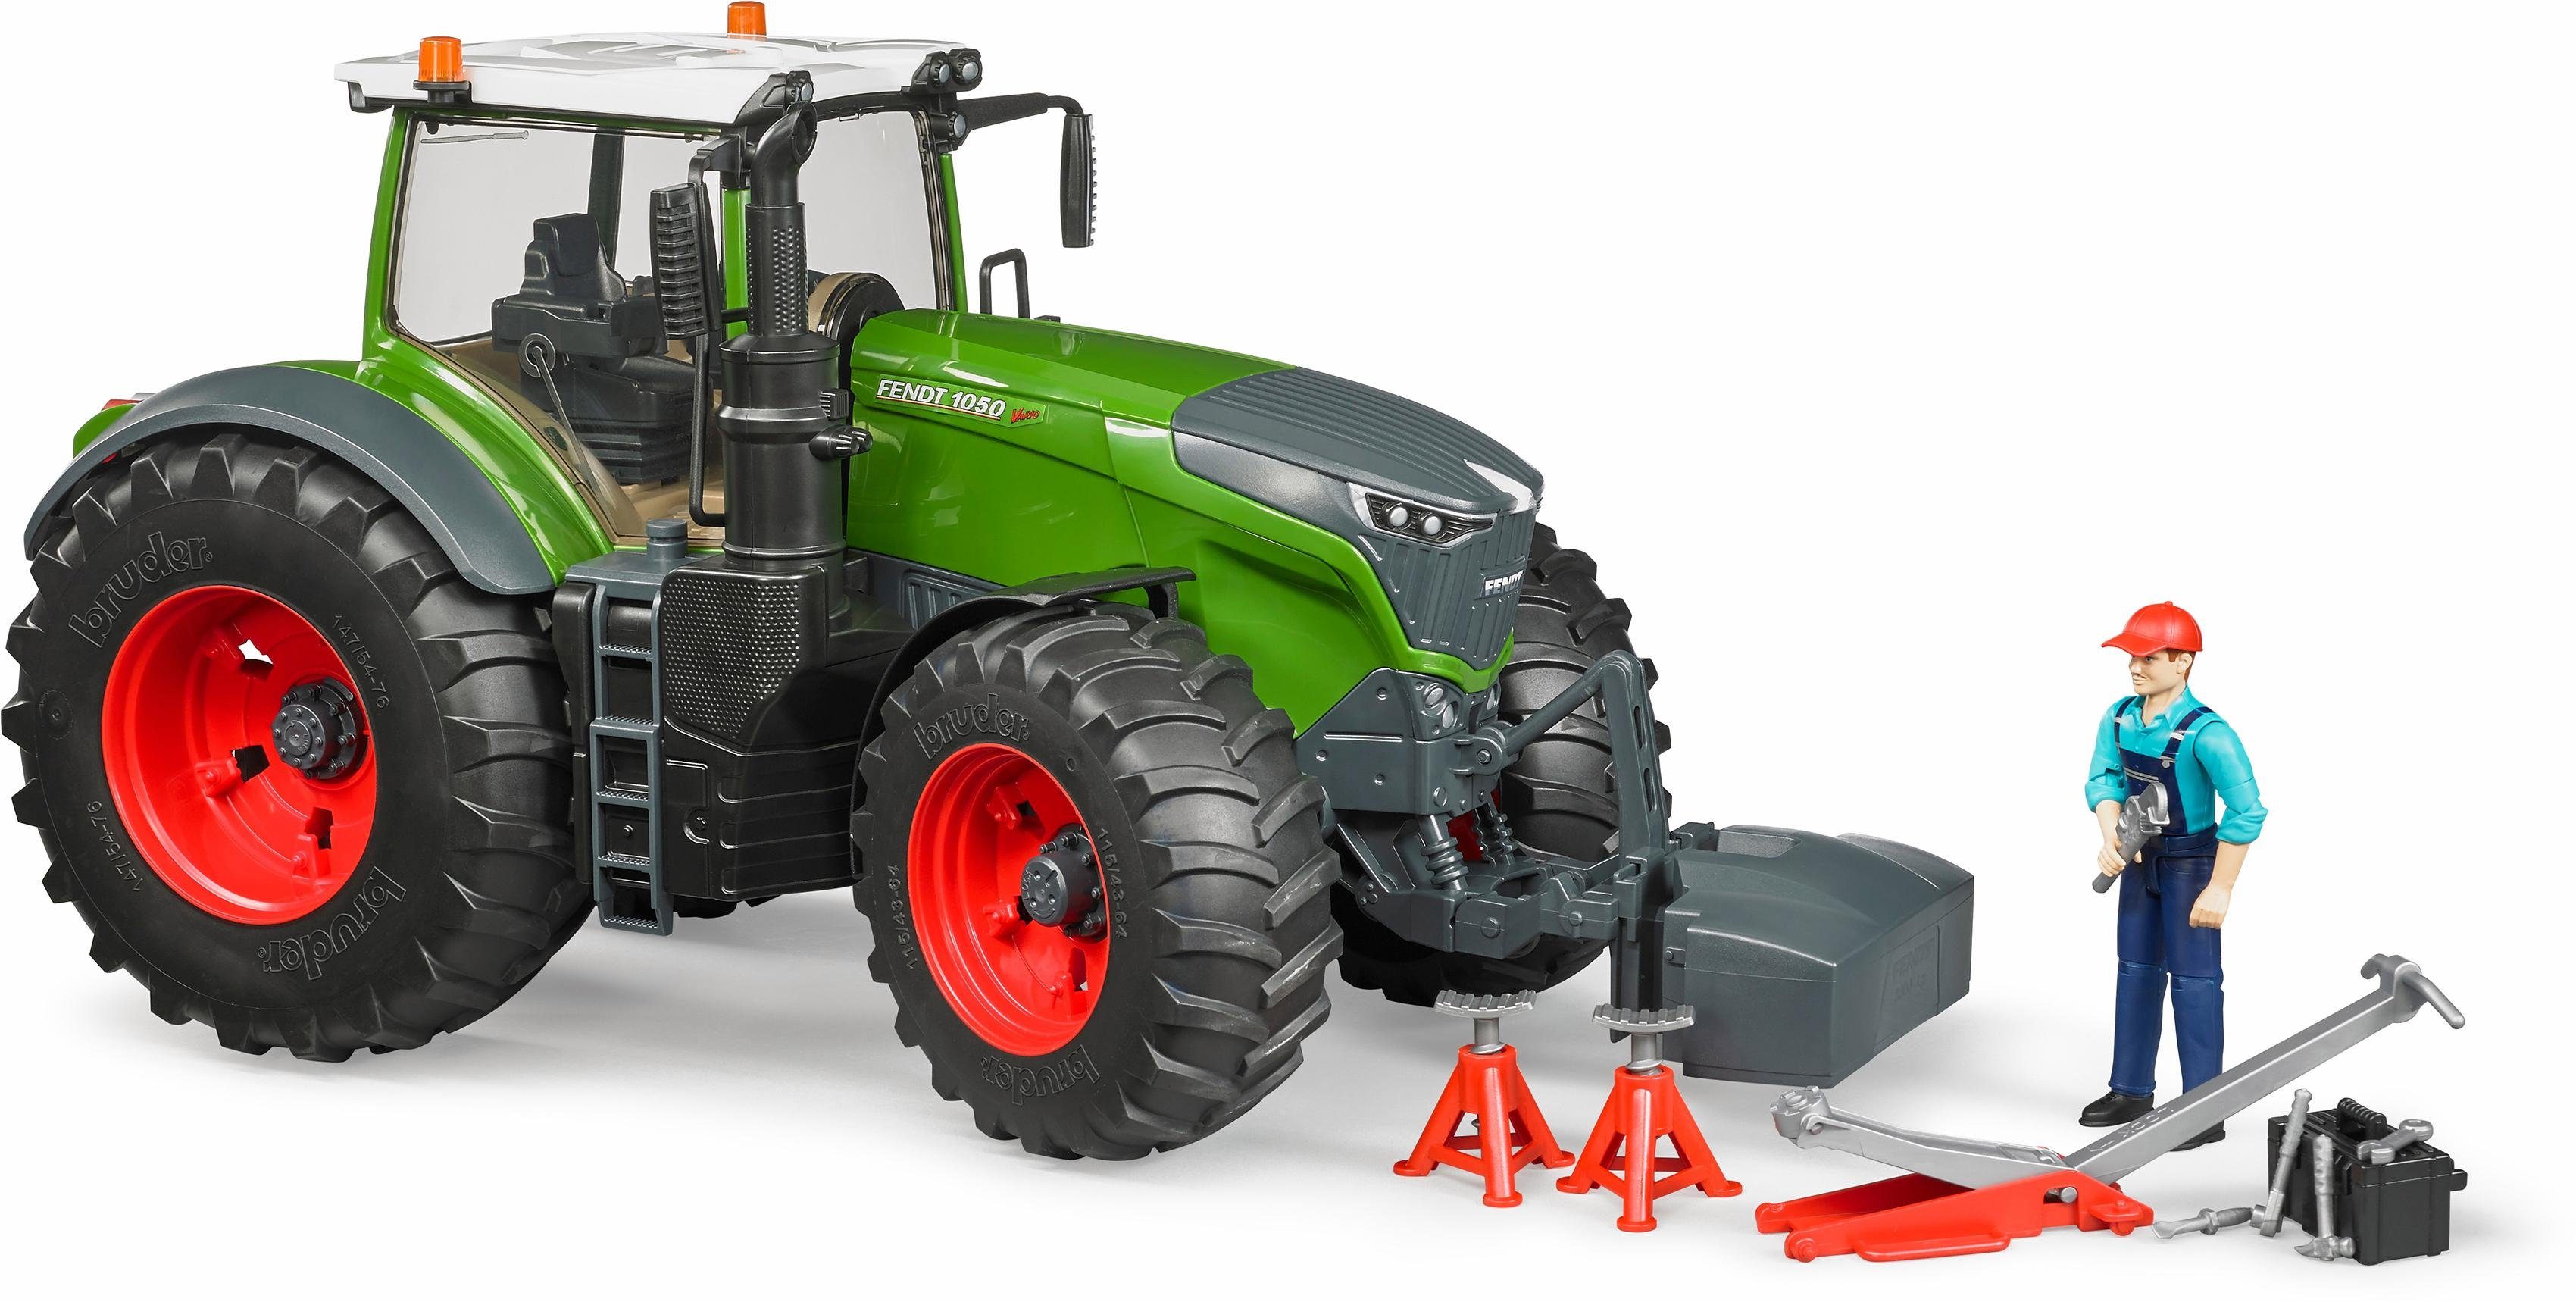 Bruder® Spielzeug-Traktor Fendt 1050 Germany Made grün, Vario, in 1:16